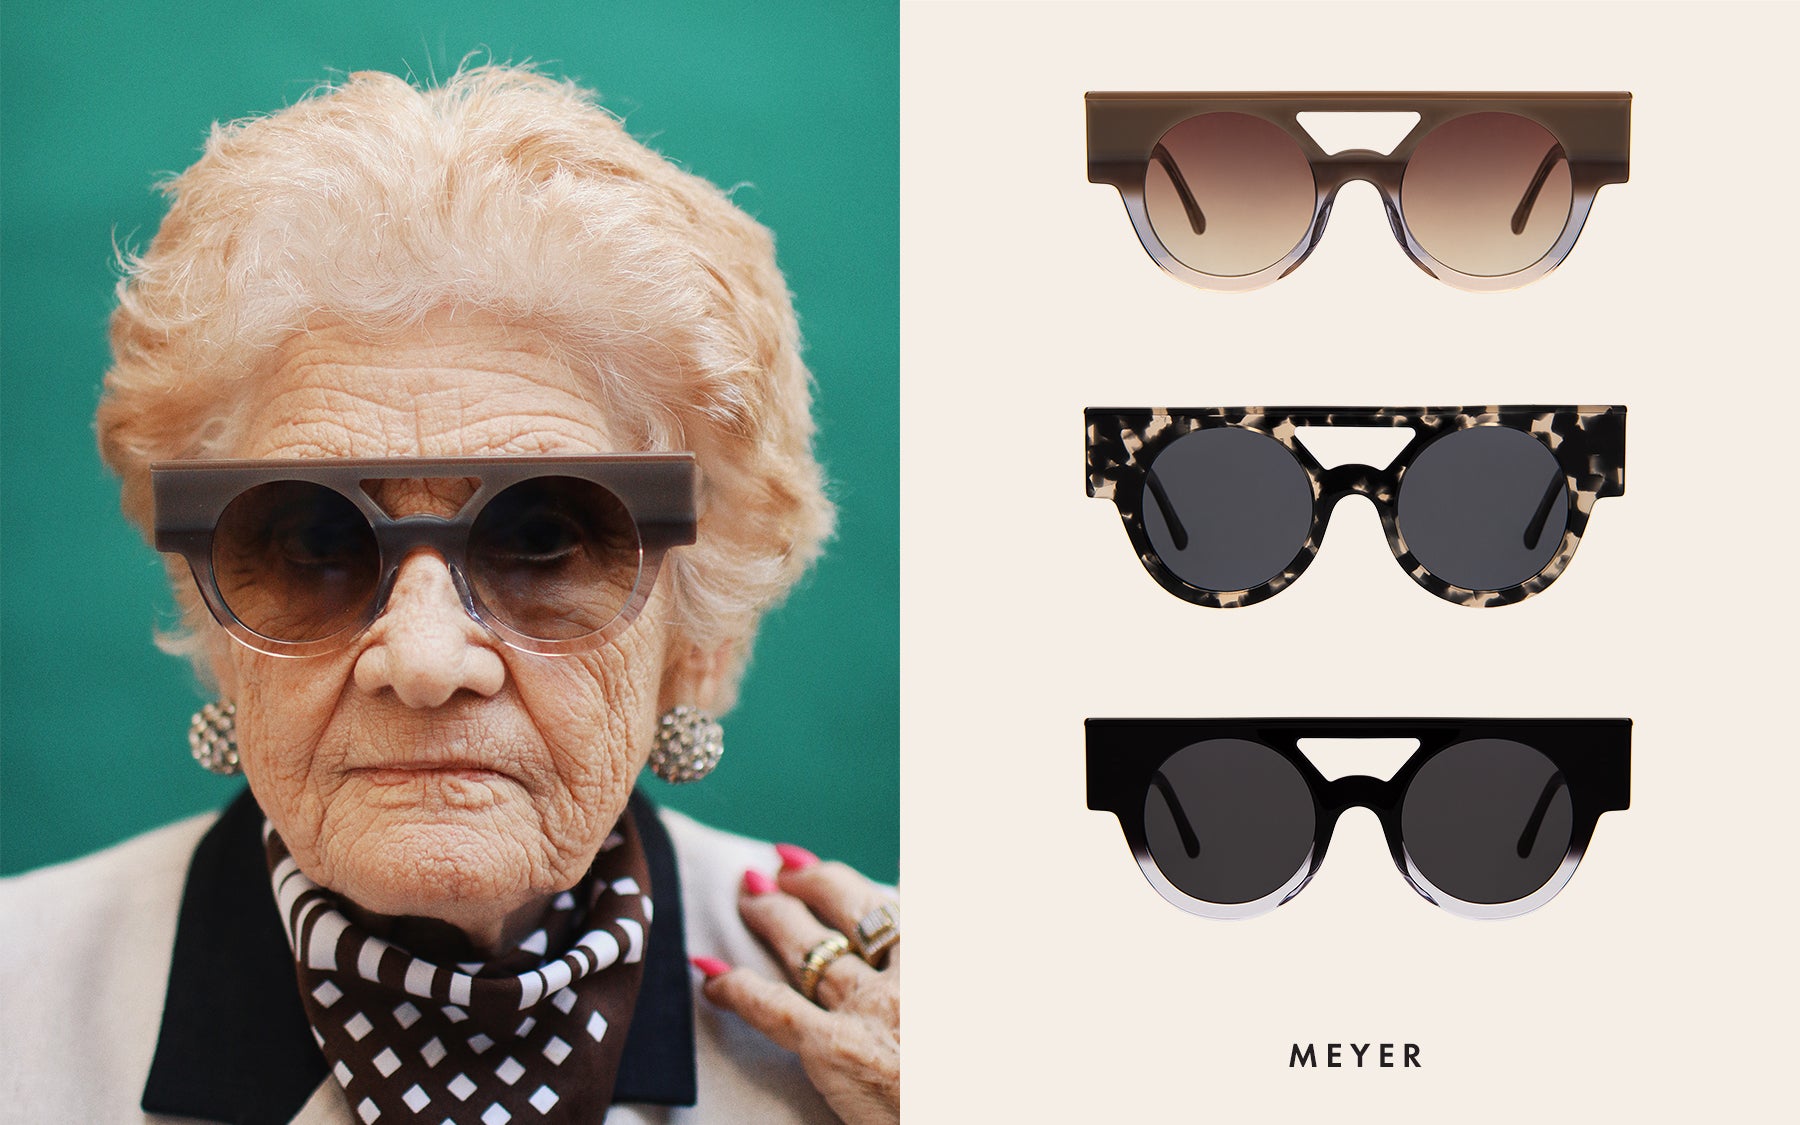 Meyer (10 year anniversary edition) shown in three colors alongside an elderly model wearing the Meyer in Mocha Cream